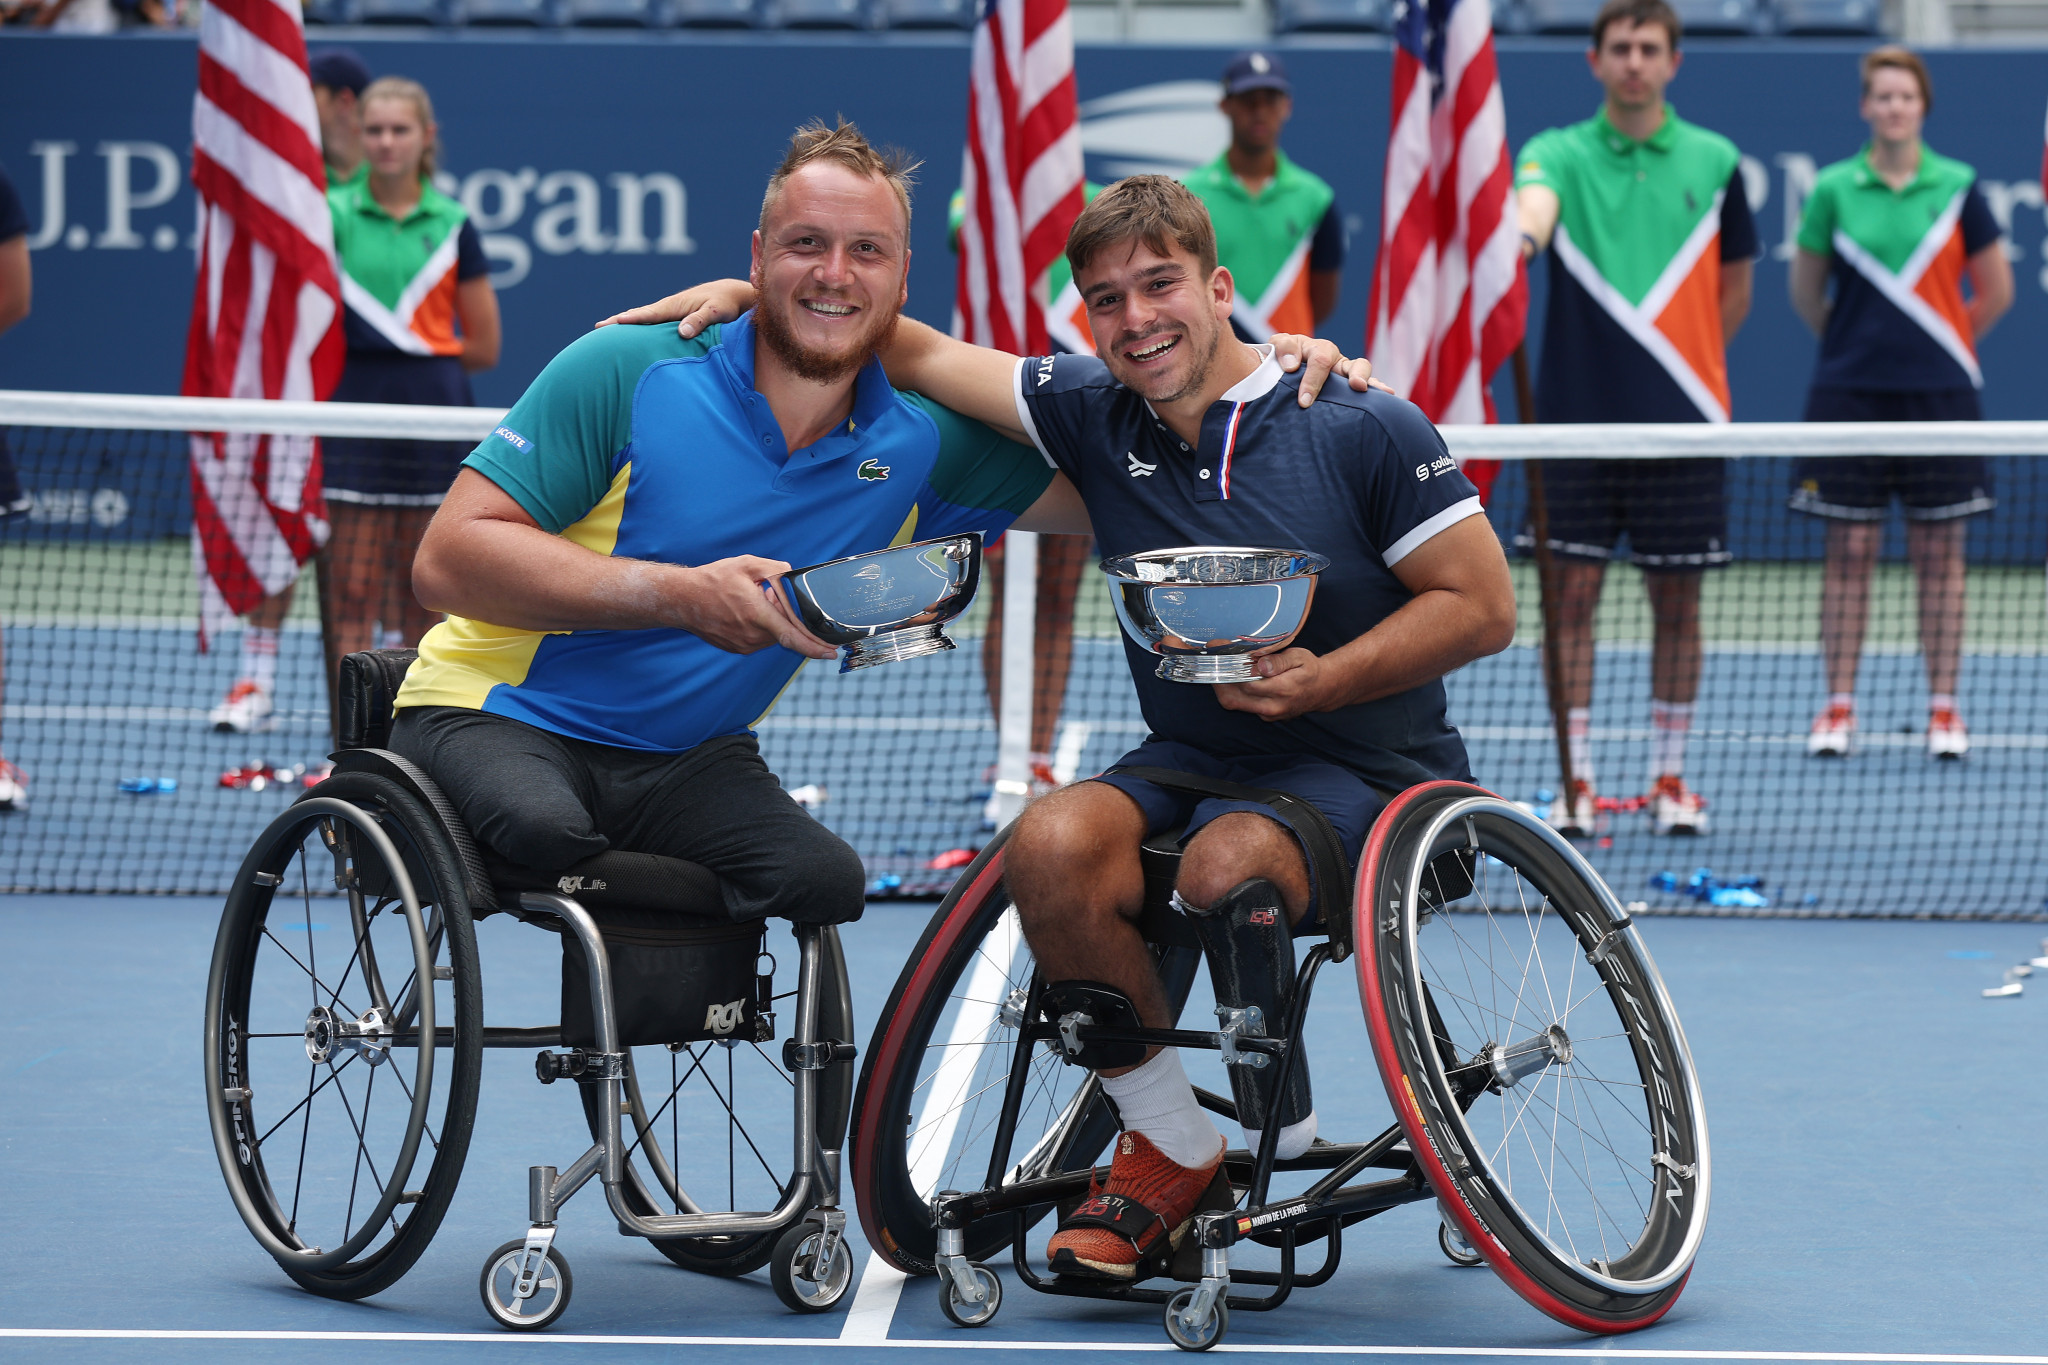 Martin de la Puente of Spain, right, won the men's wheelchair doubles final with French partner Nicolas Peifer ©Getty Images